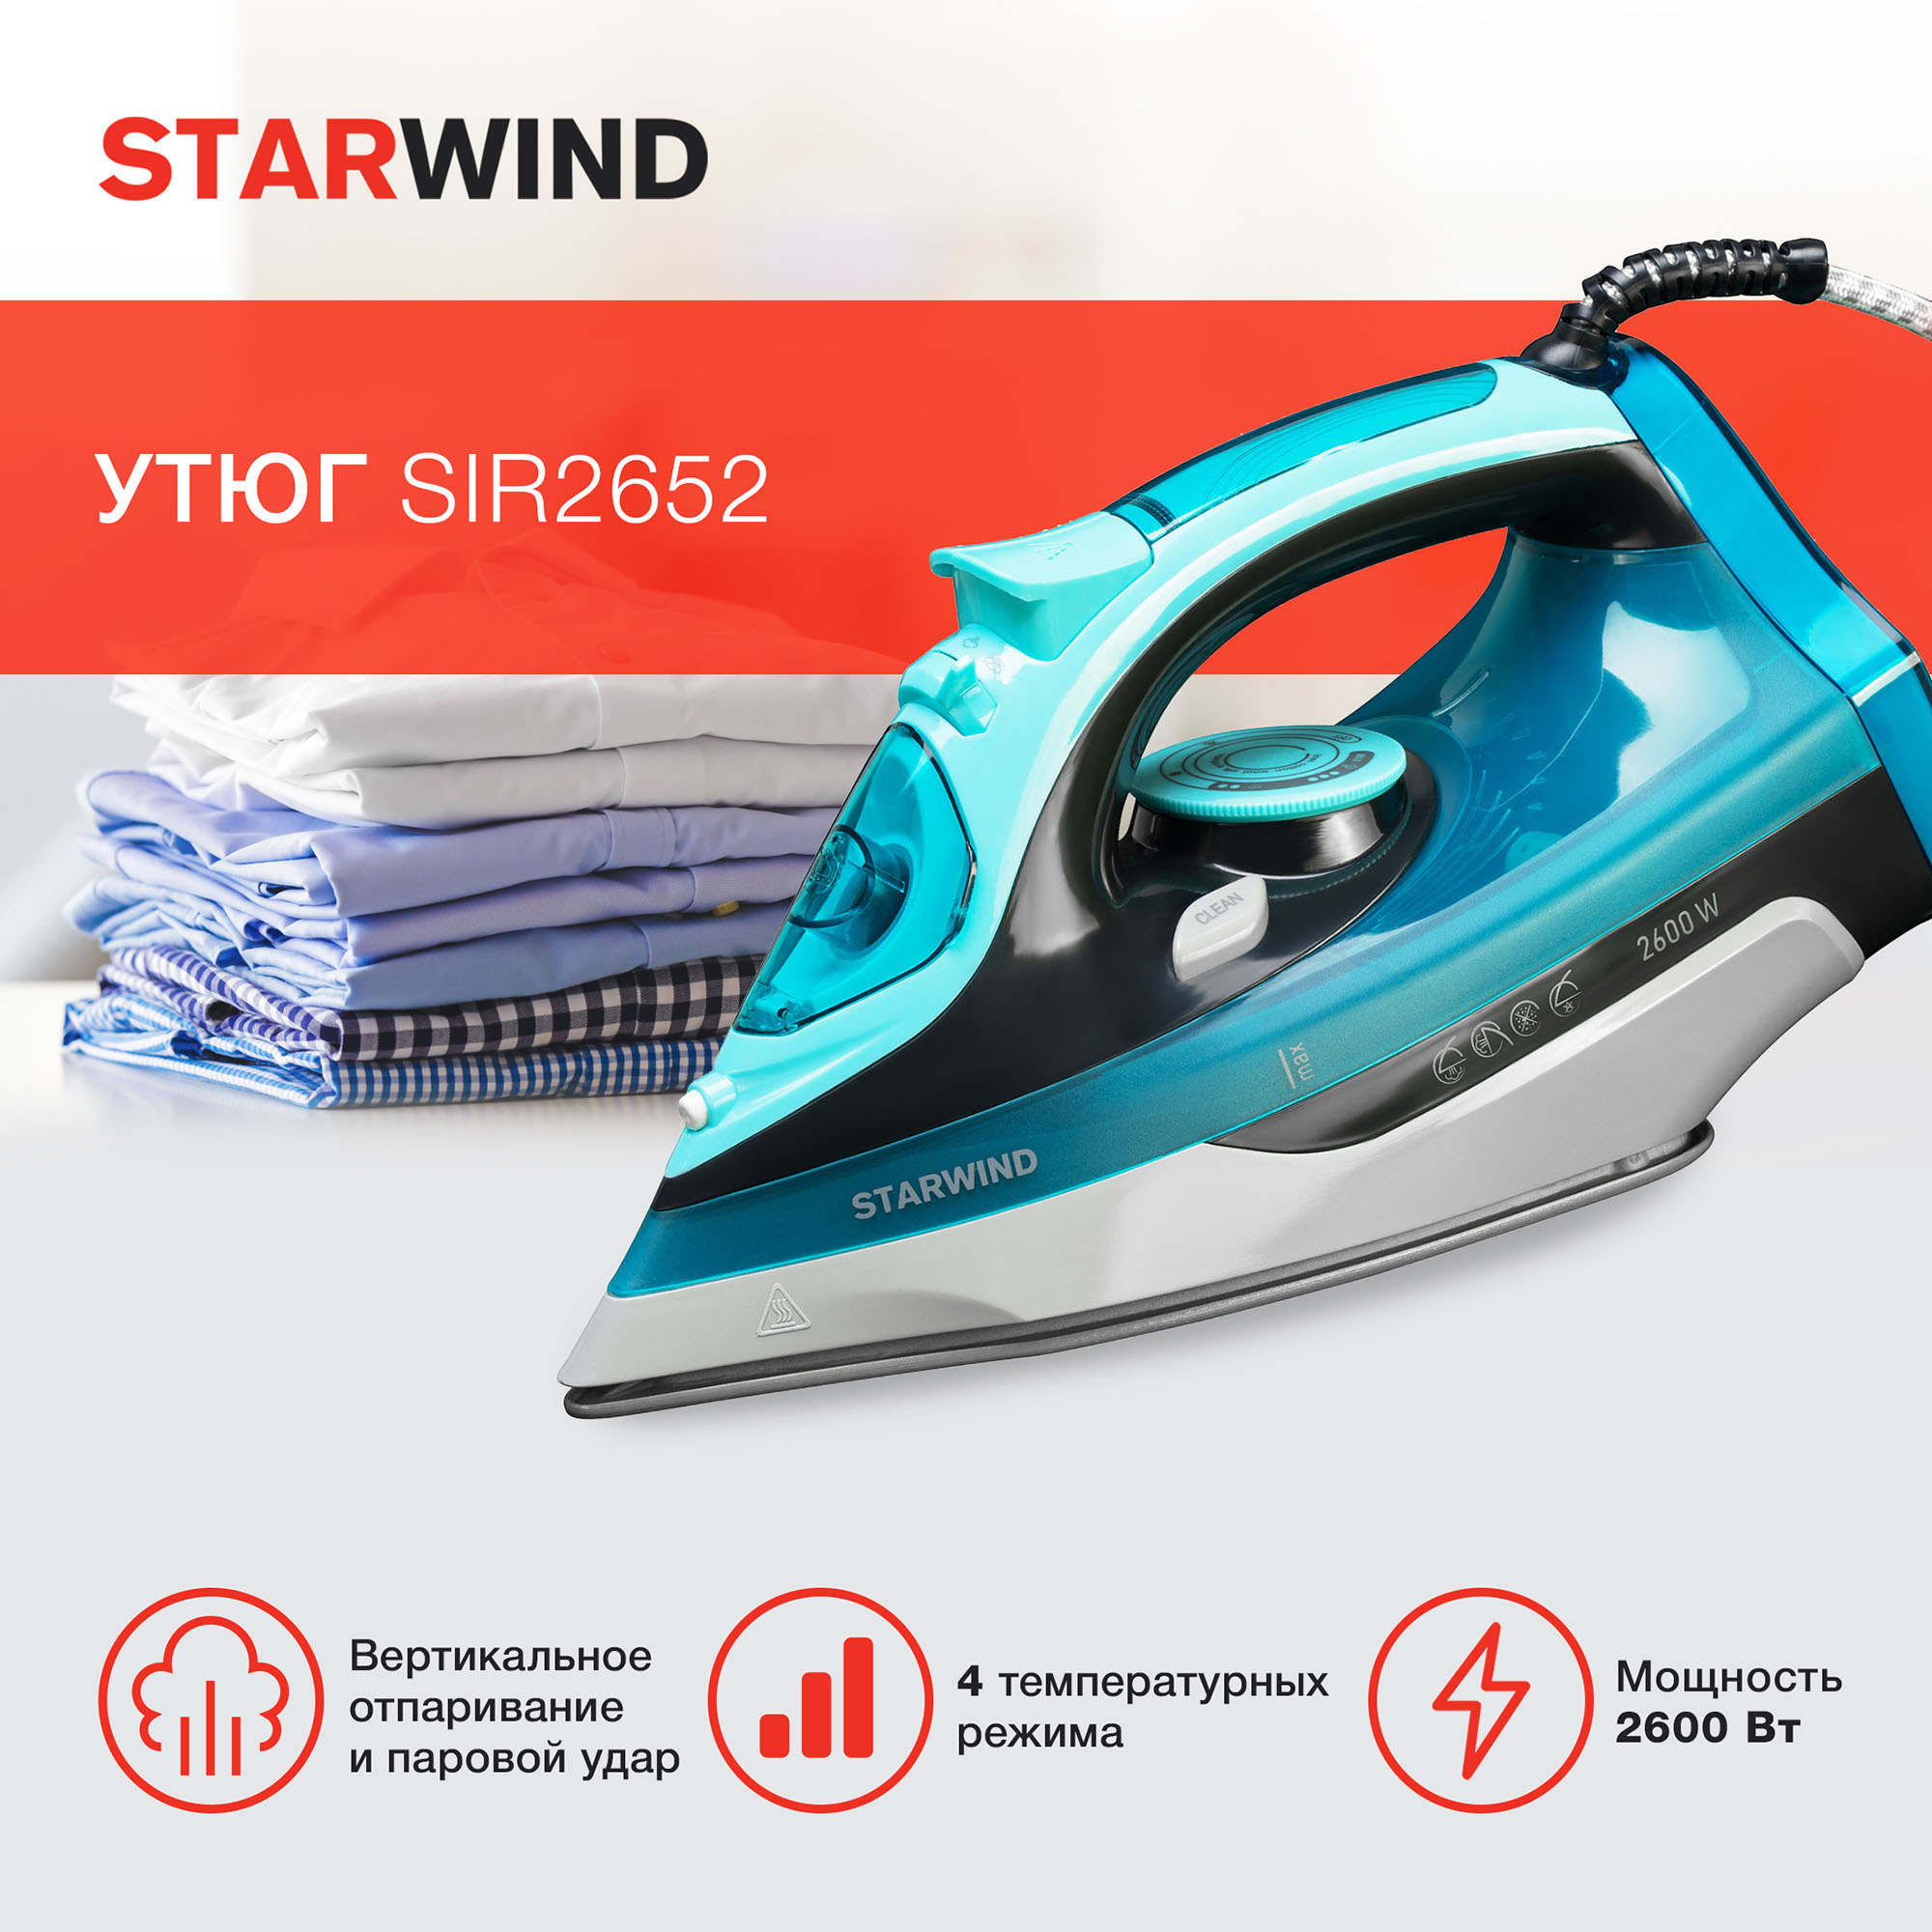 Утюг Starwind SIR2652 бирюзовый/черный от магазина Старвинд